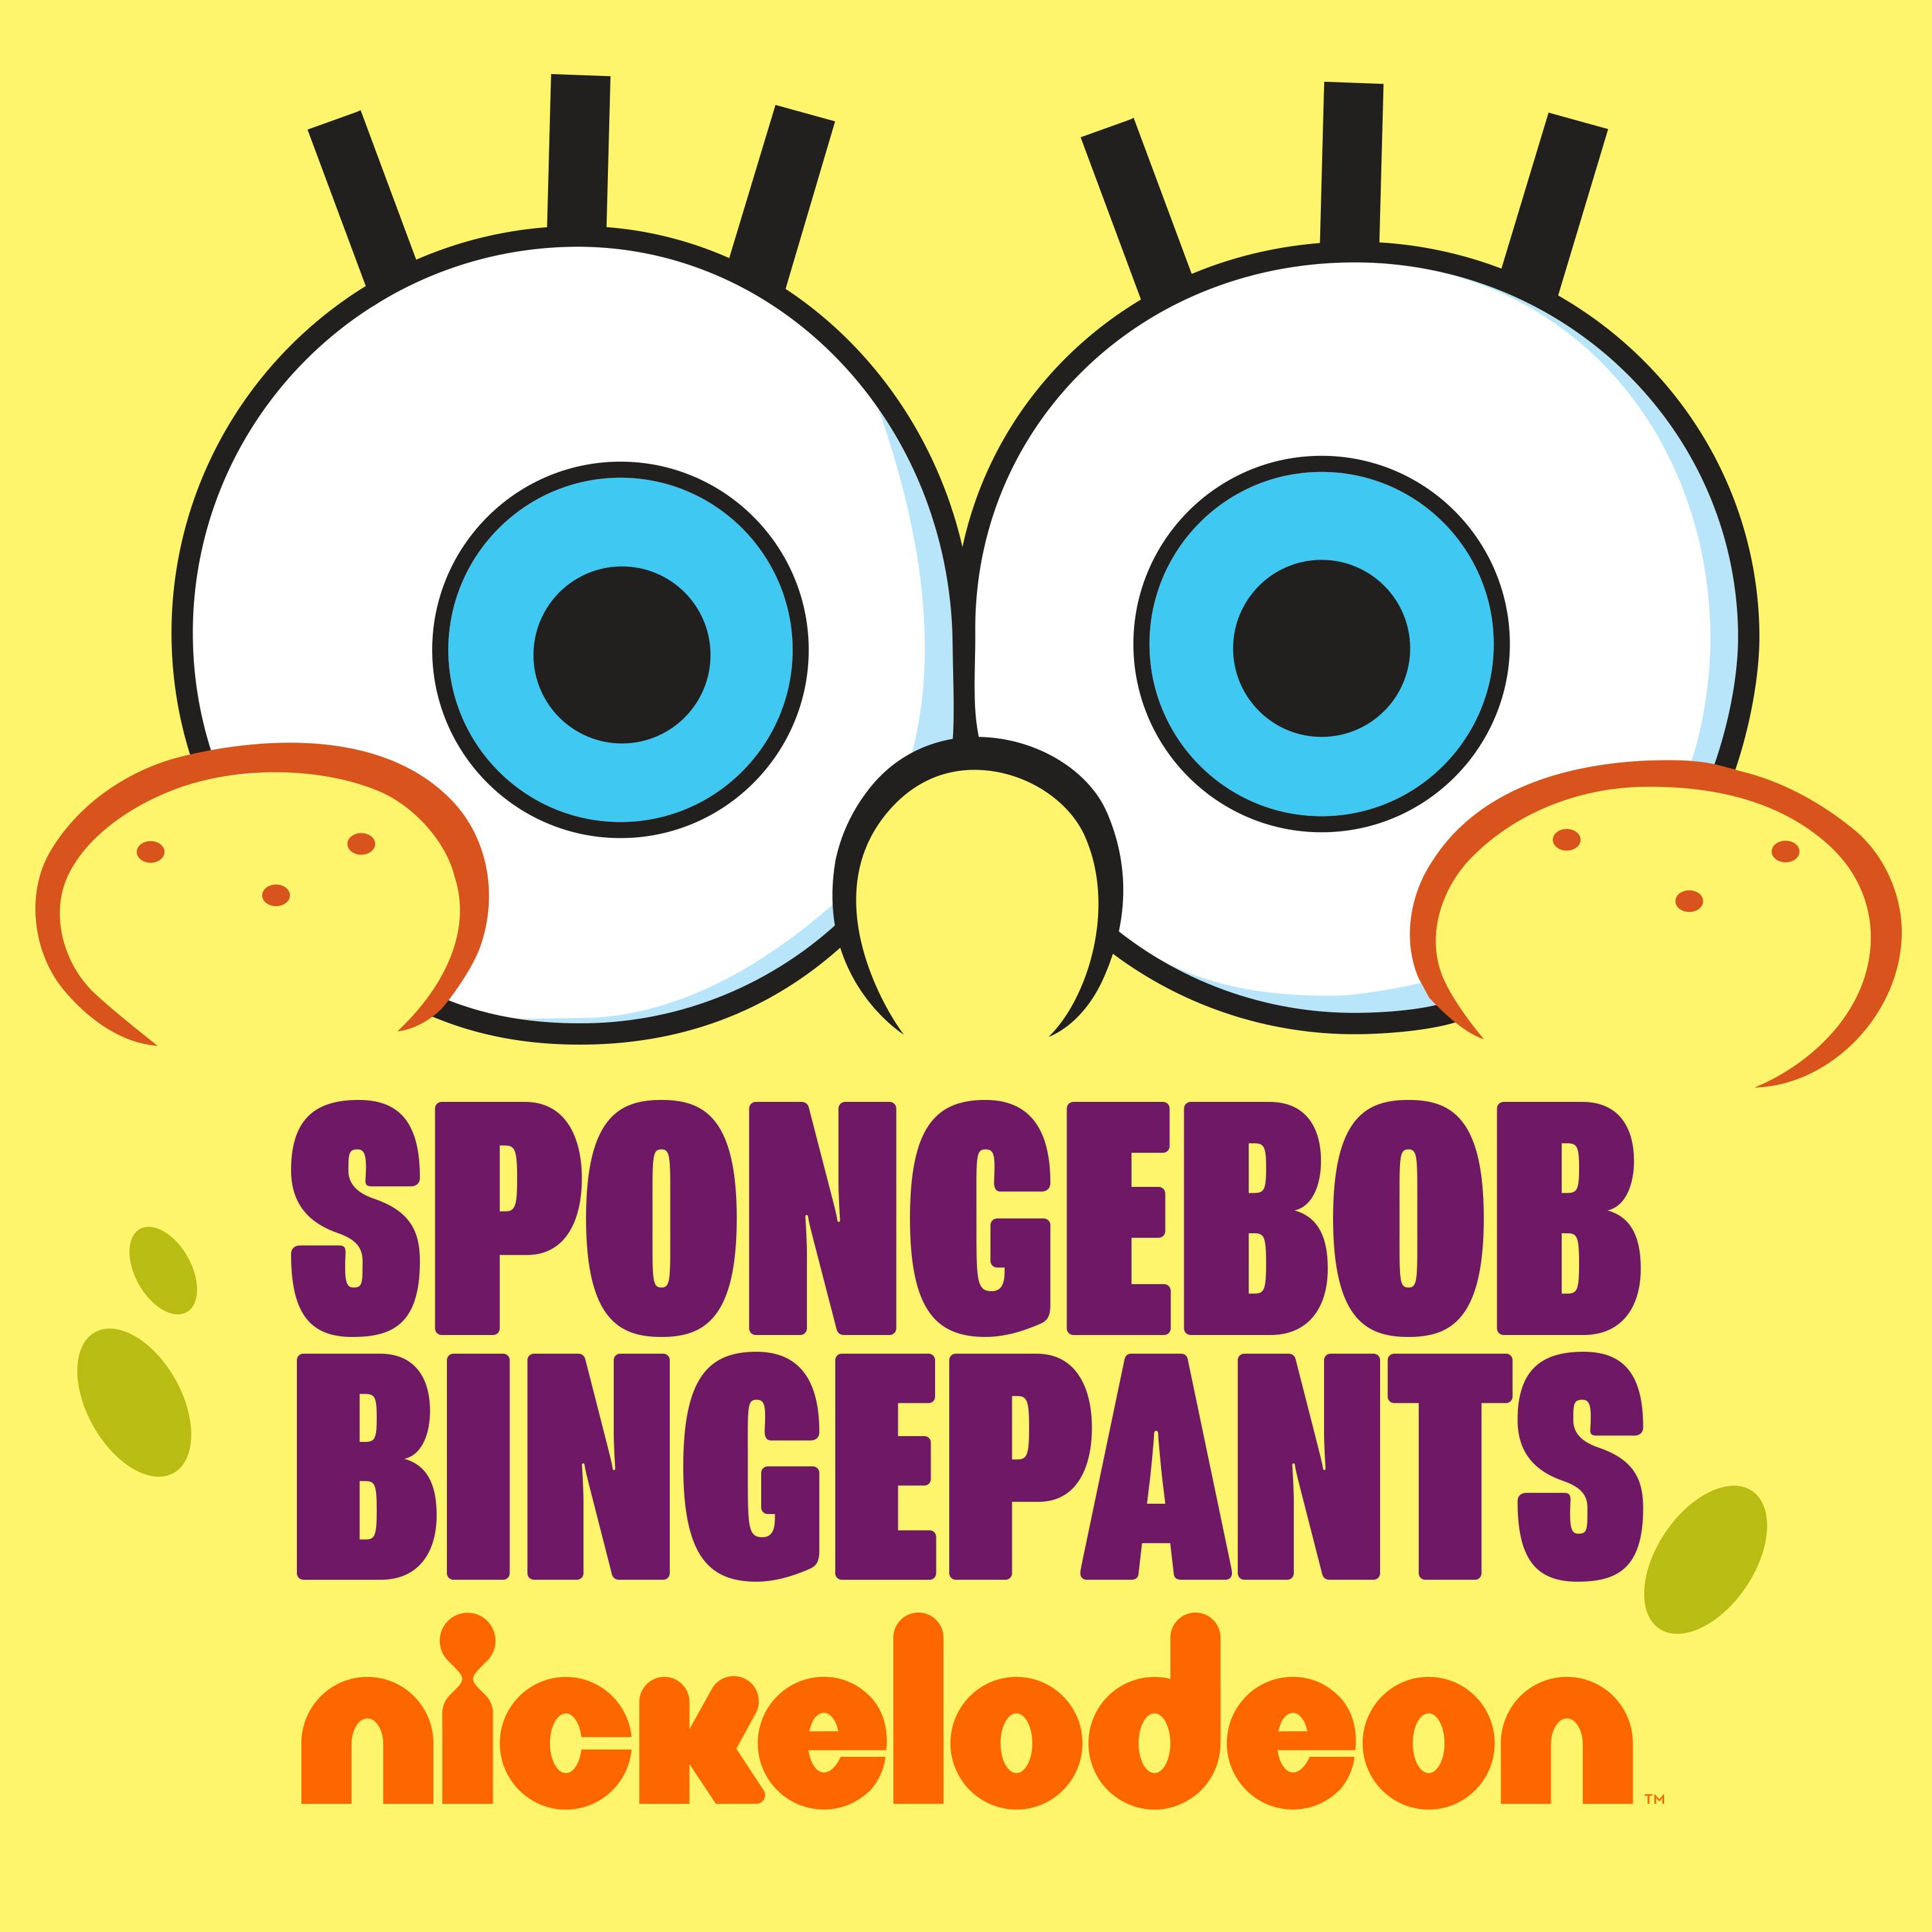 SpongeBob BingePants podcast show image